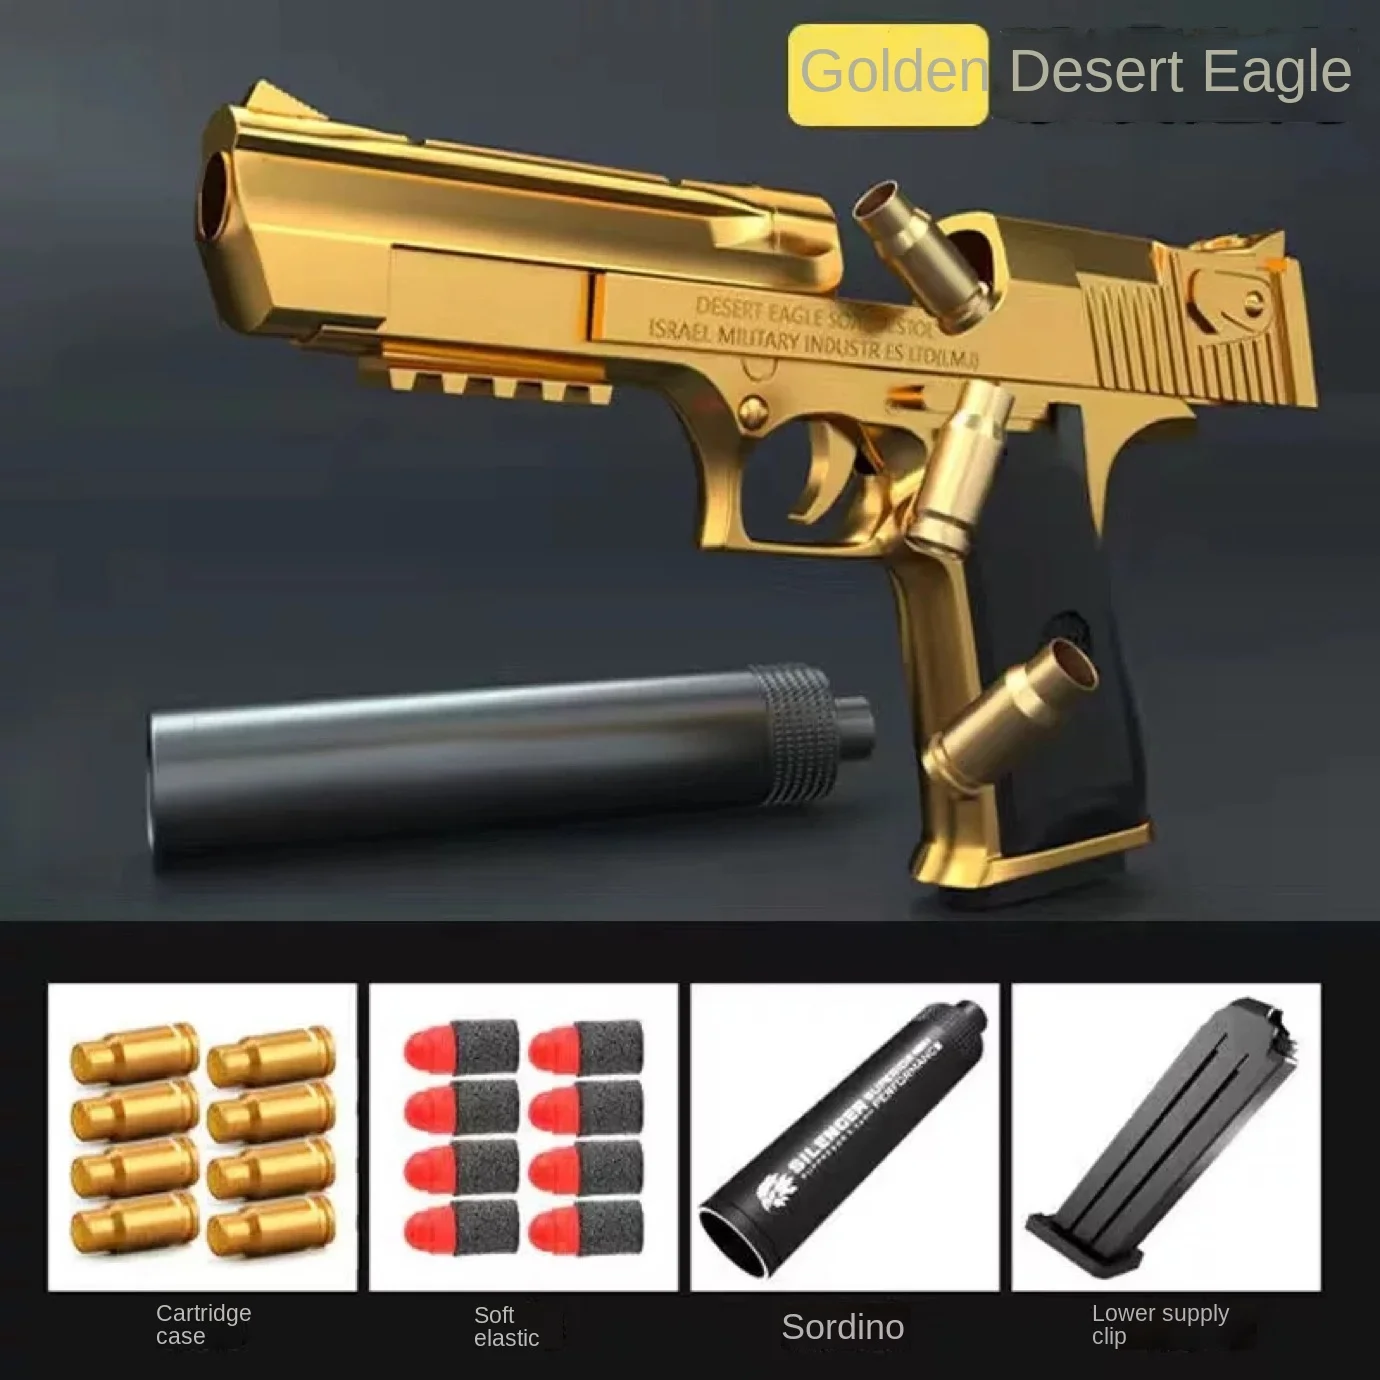 

New transparent shooting pistol outdoor soft bullet pistol toy Glock Colt Sand Eagle CS game boy birthday gift